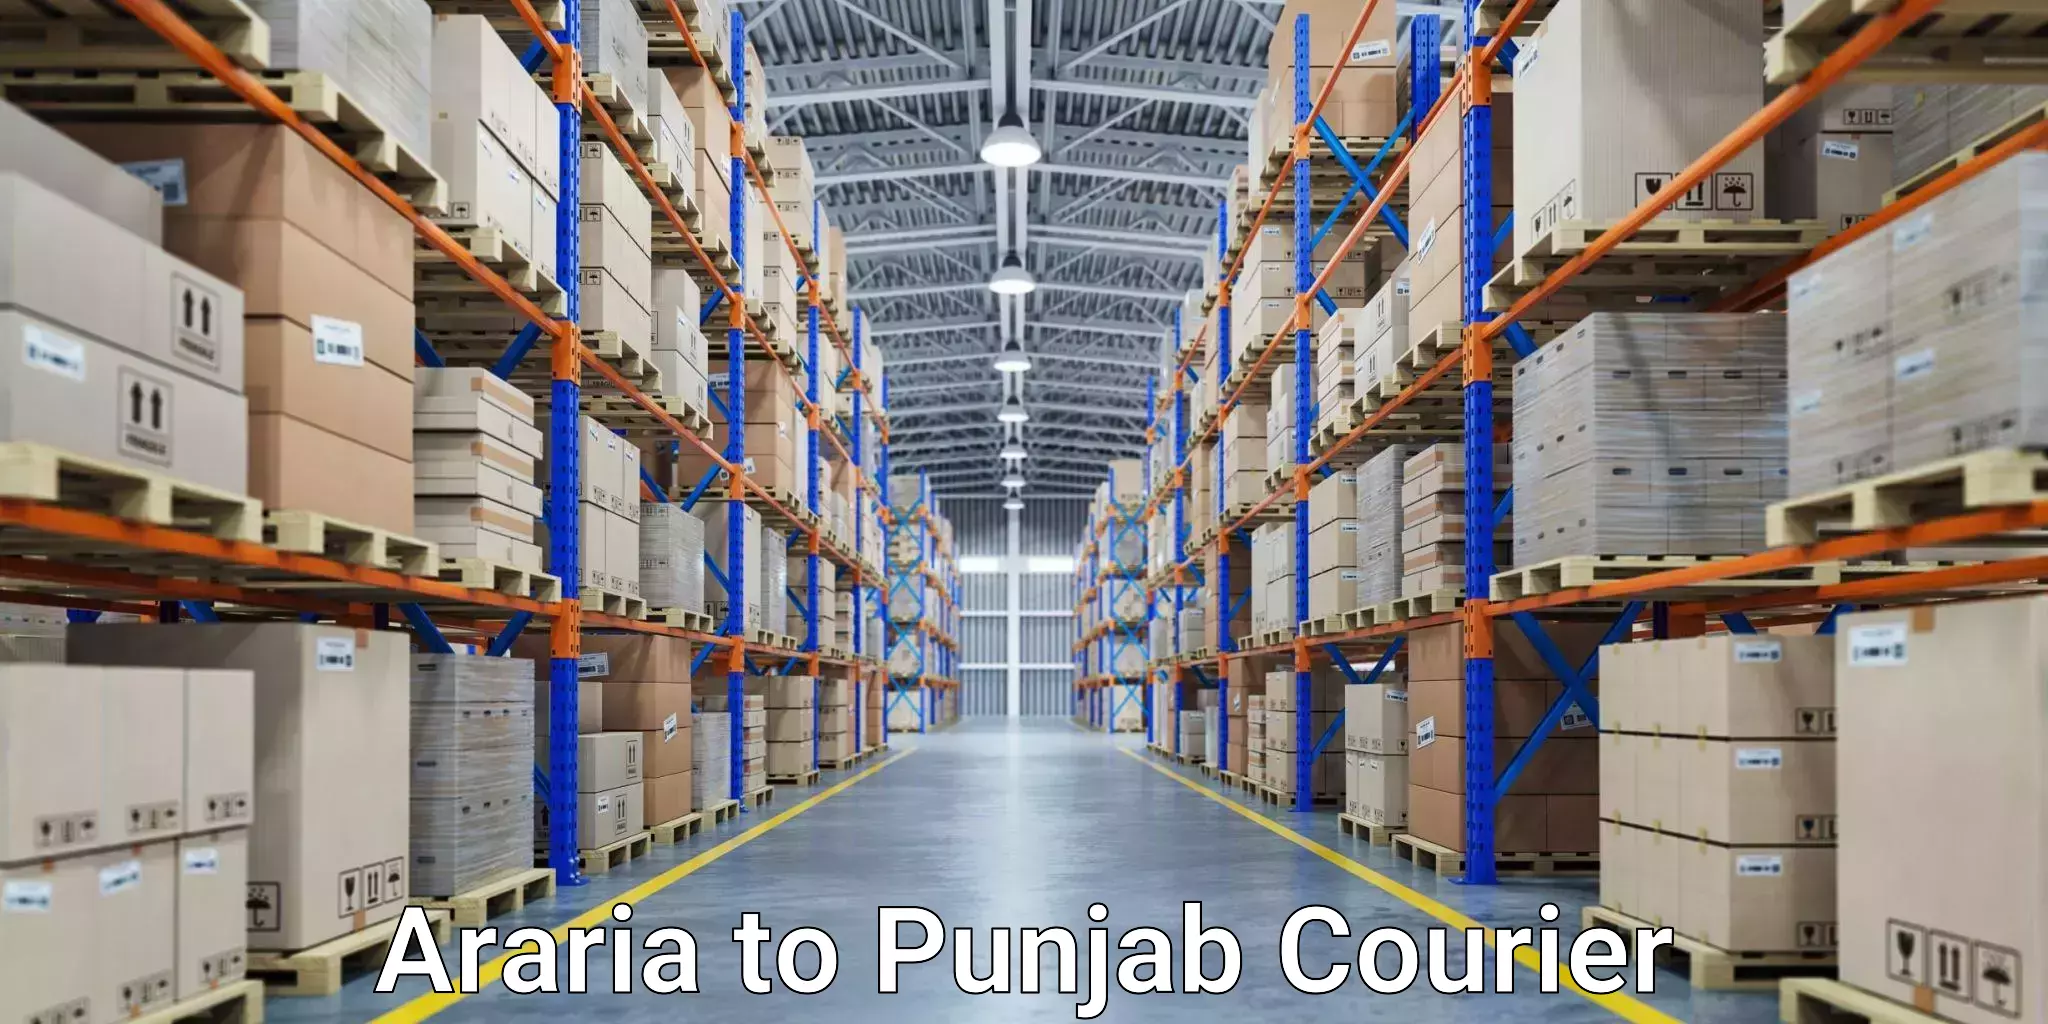 Customer-centric shipping Araria to Punjab